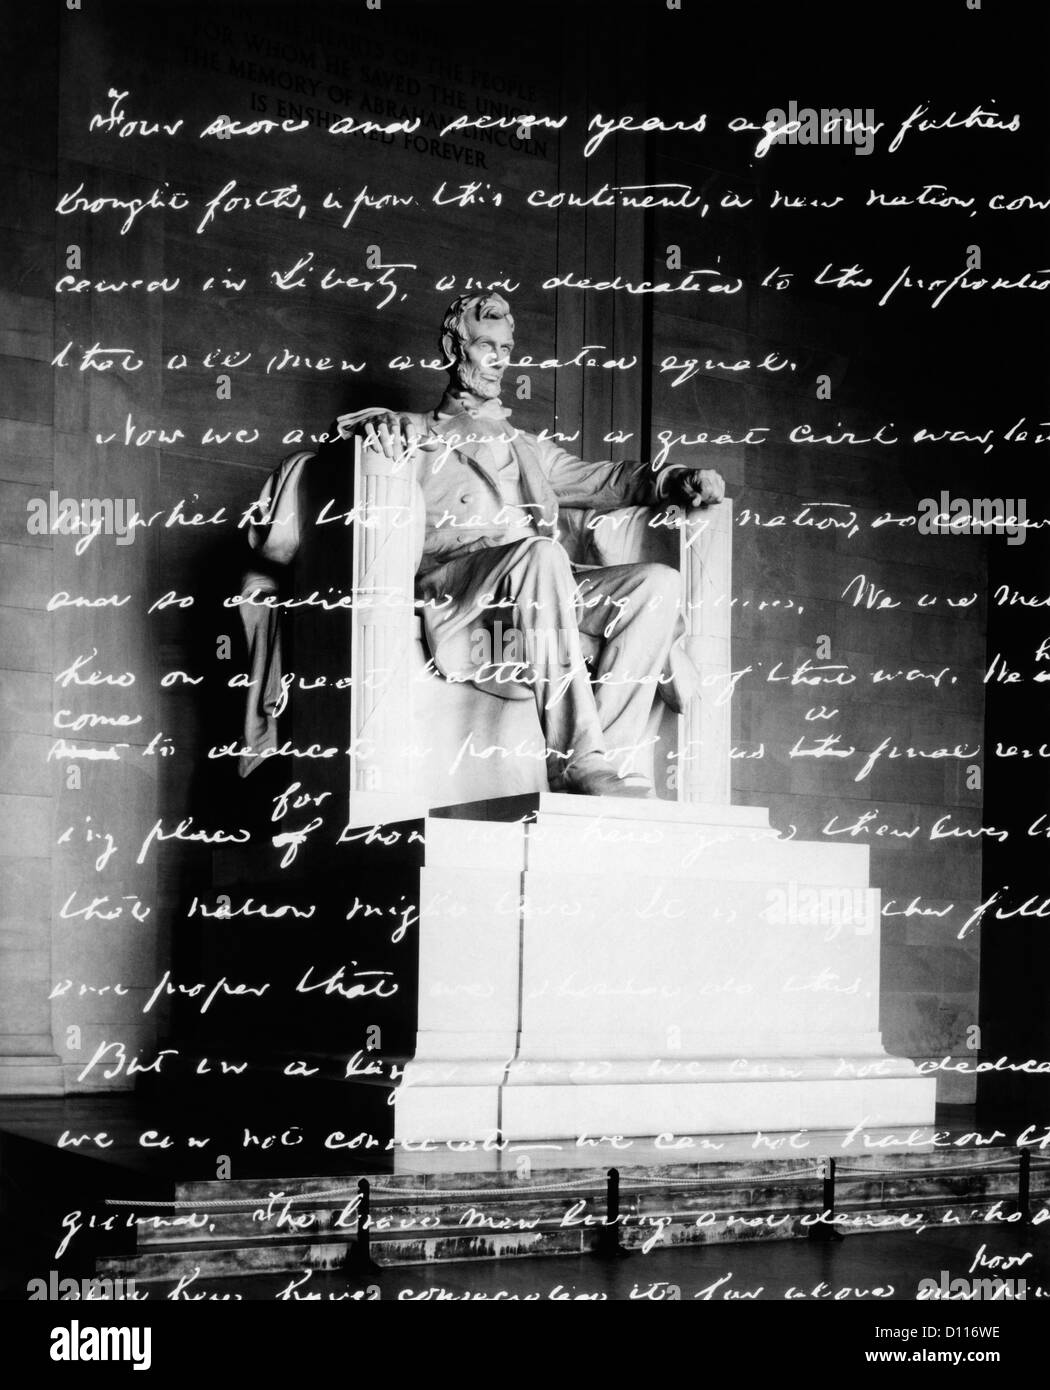 HANDWRITTEN GETTYSBURG ADDRESS SUPERIMPOSED OVER STATUE AT LINCOLN MEMORIAL Stock Photo